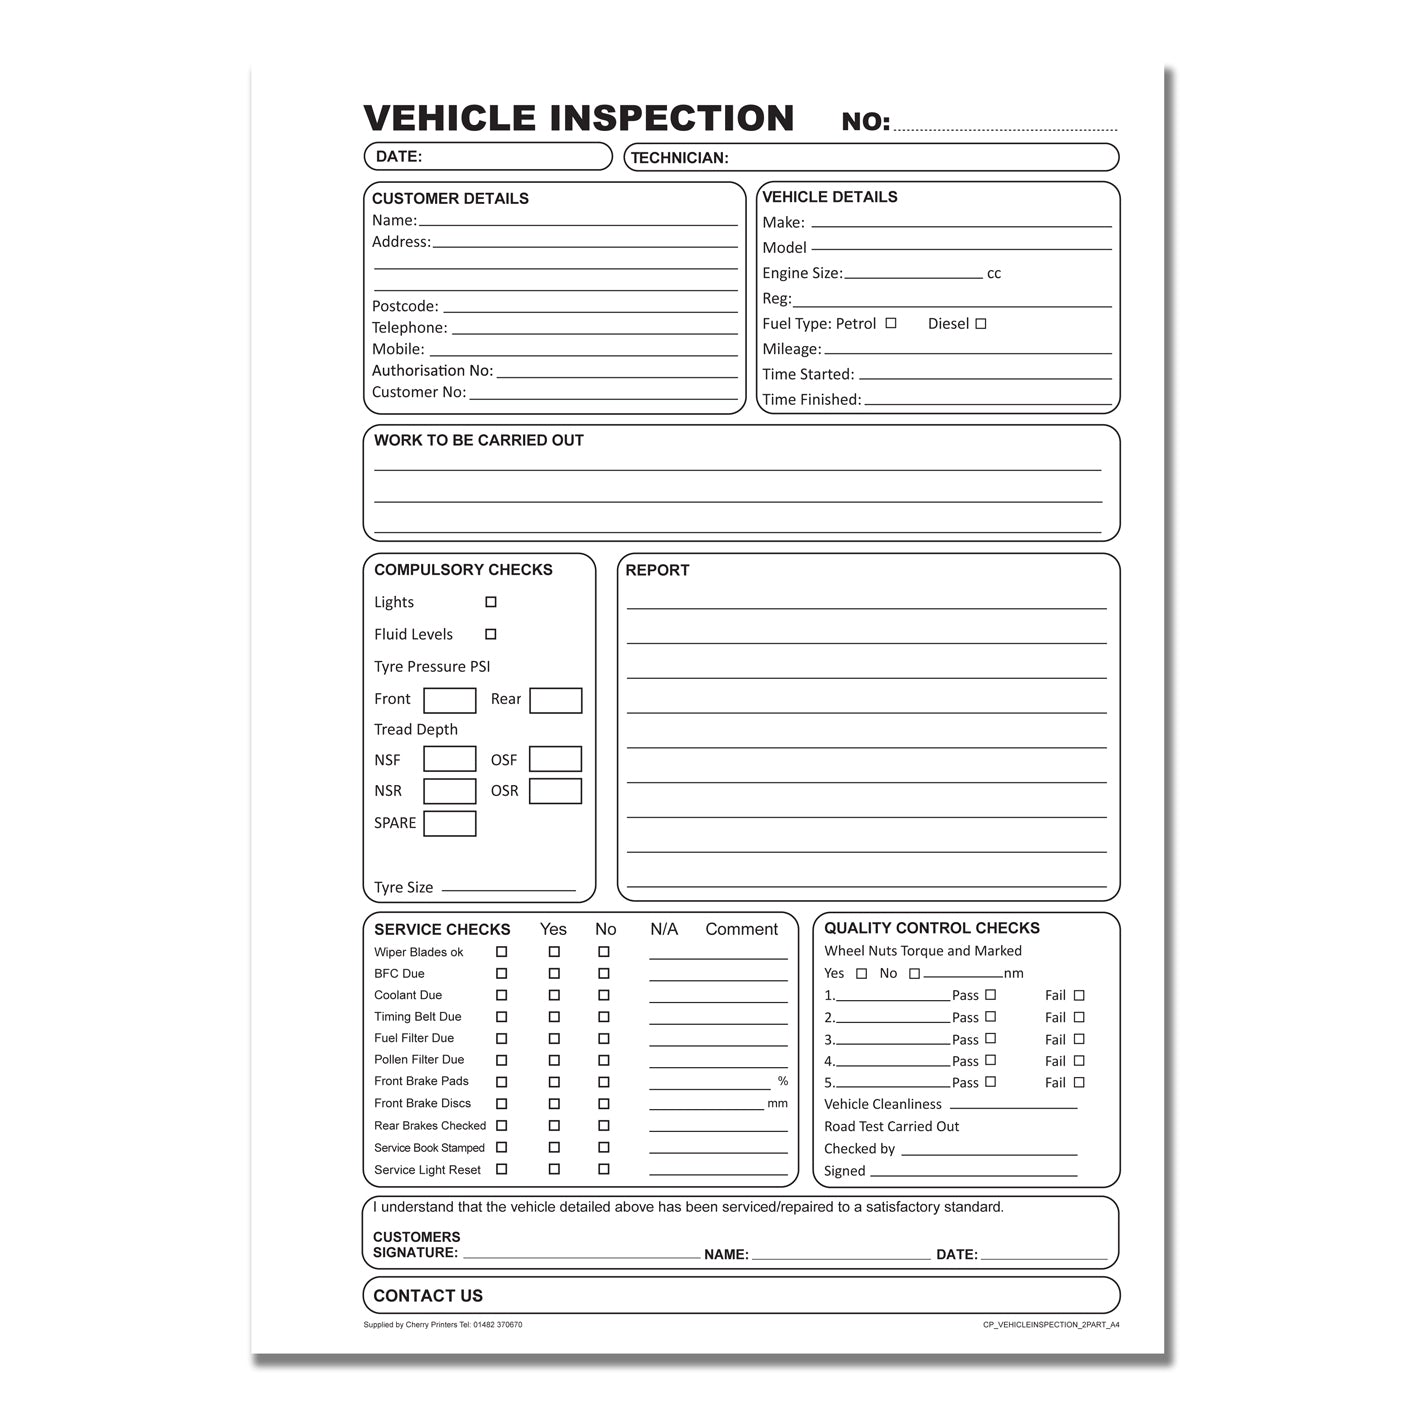 NCR Fahrzeuginspektionsbuch A4 Duplikat